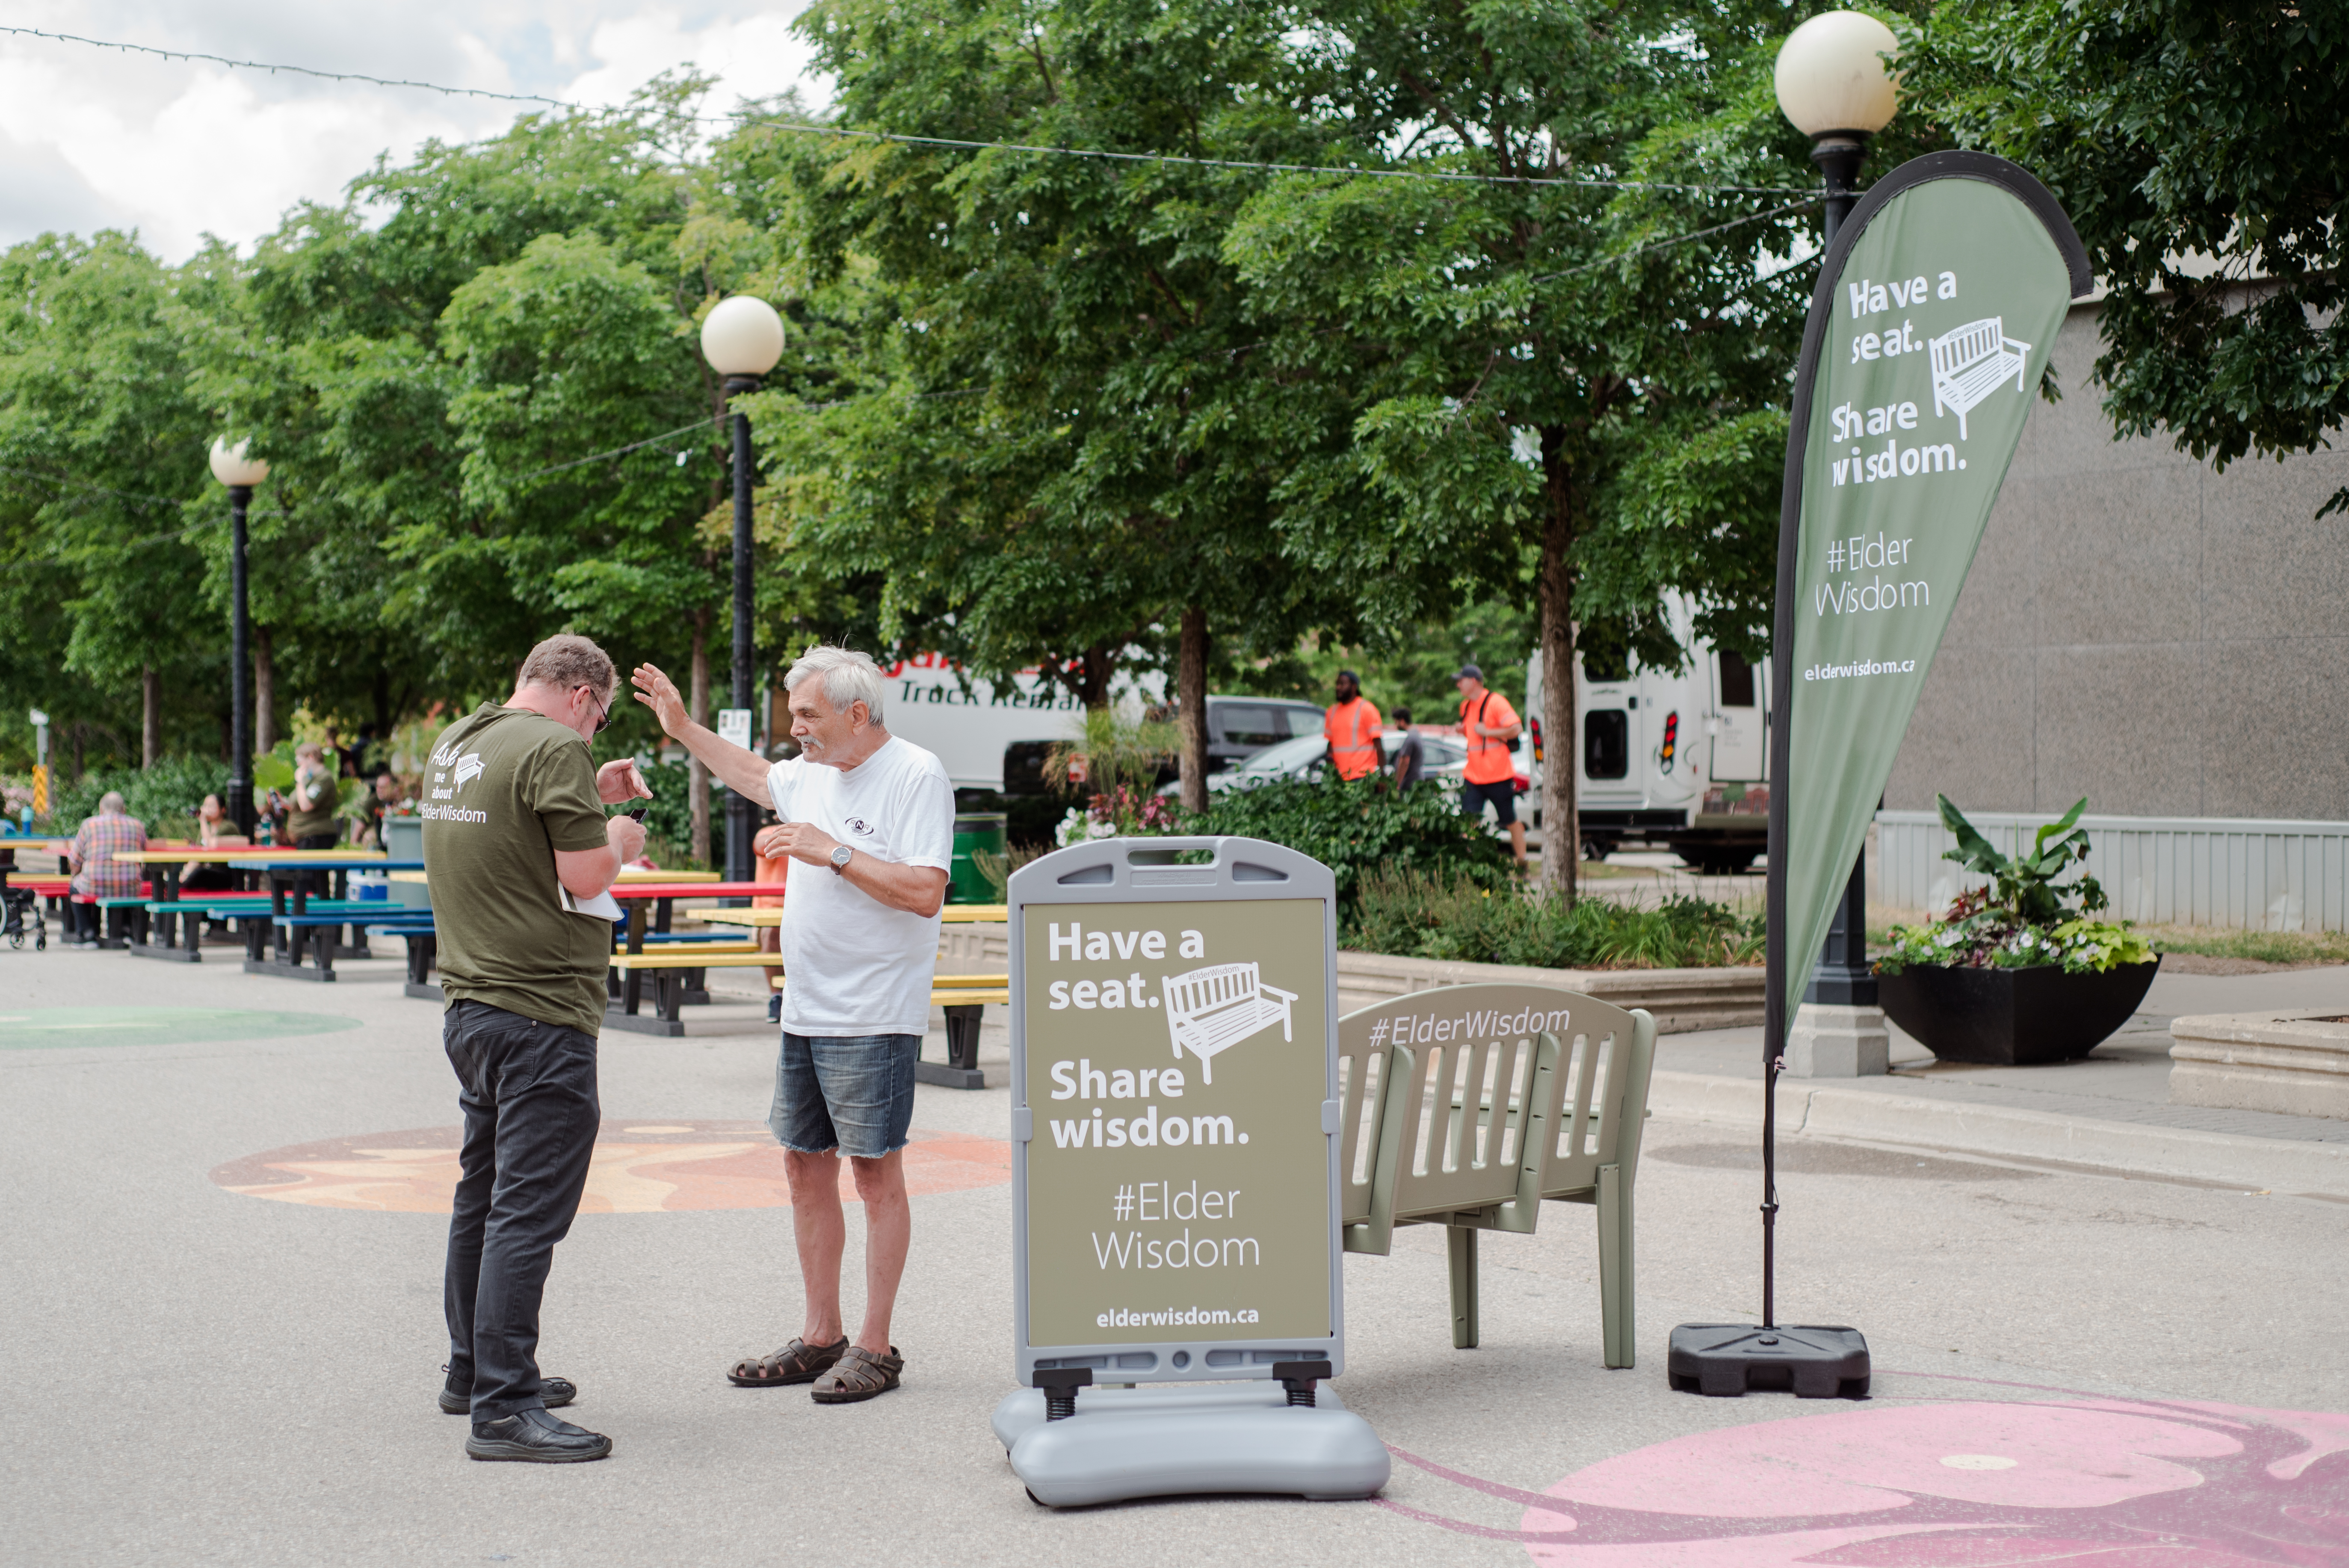 Writer interviews pedestrian at the #ElderWisdom green bench event outdoors